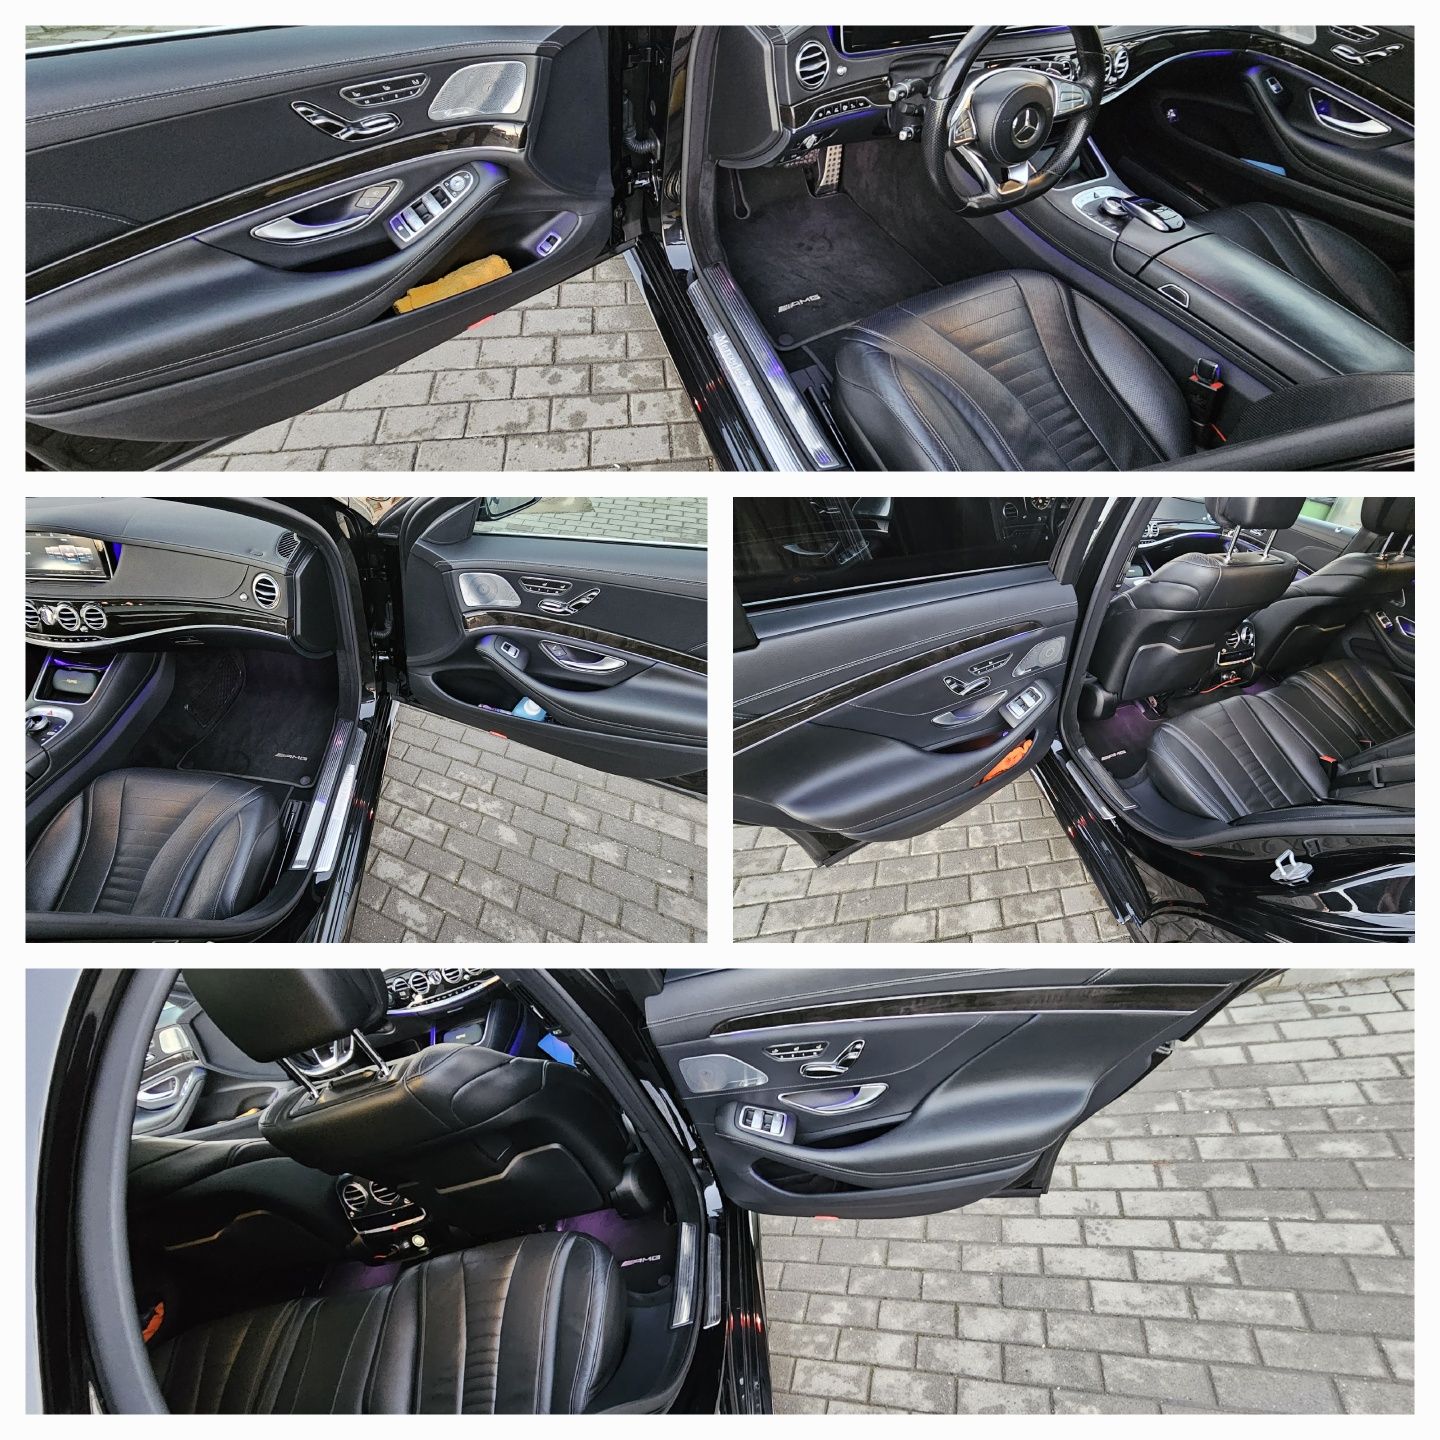 Mercedes 350 Diesel AMG Edition